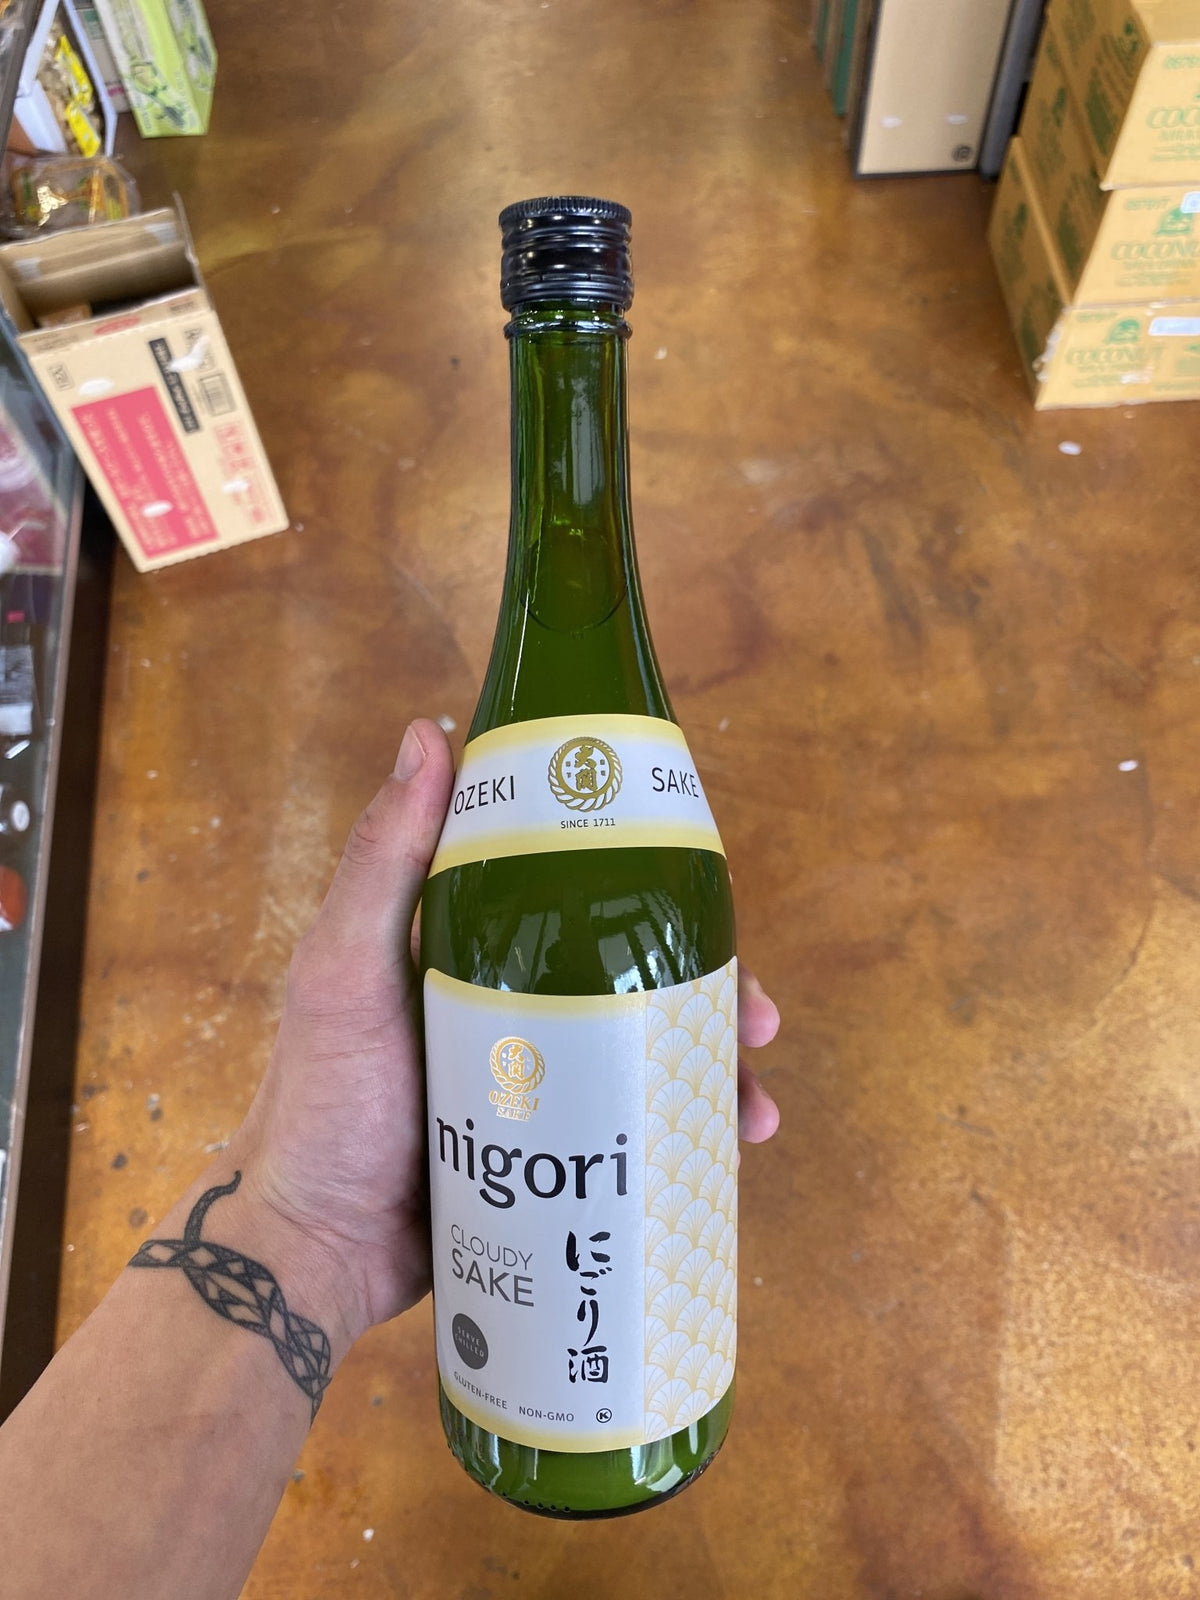 All About Nigori, the Cloudy Sake